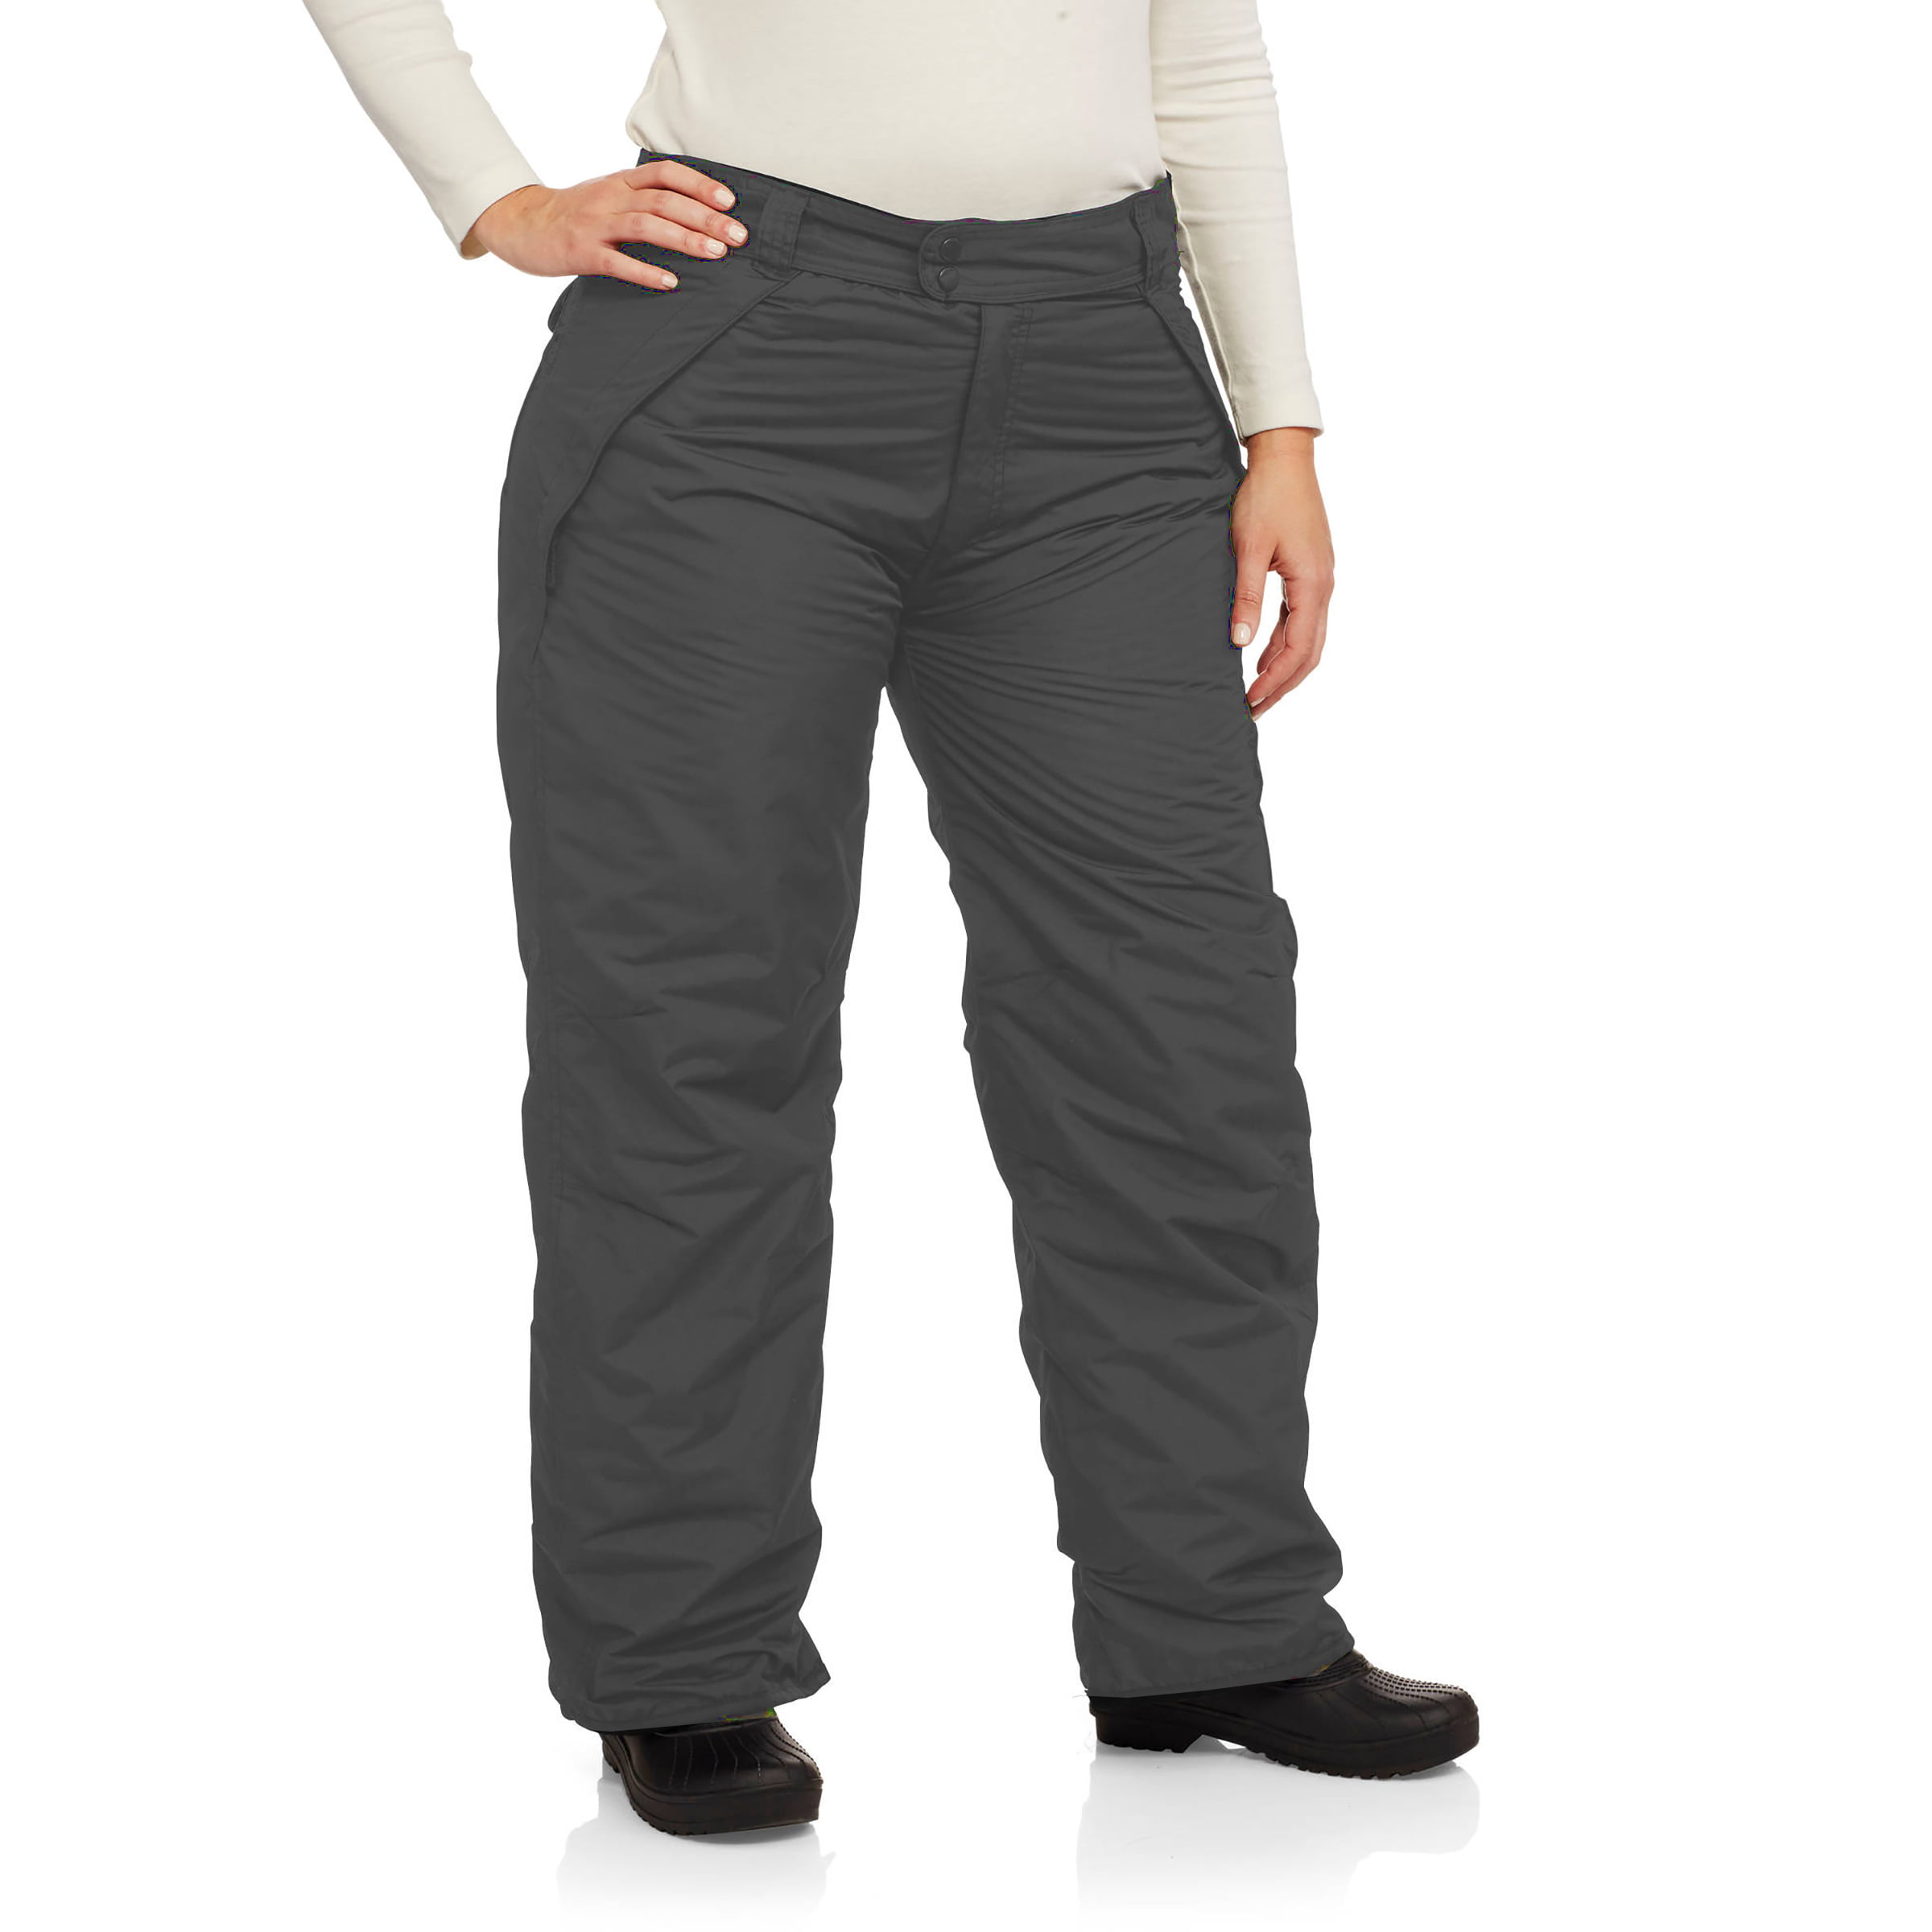 ARCTIX Insulated 40 X 32 Snow Pants Women's Black XL Zip Legs RN 111478 for sale online 